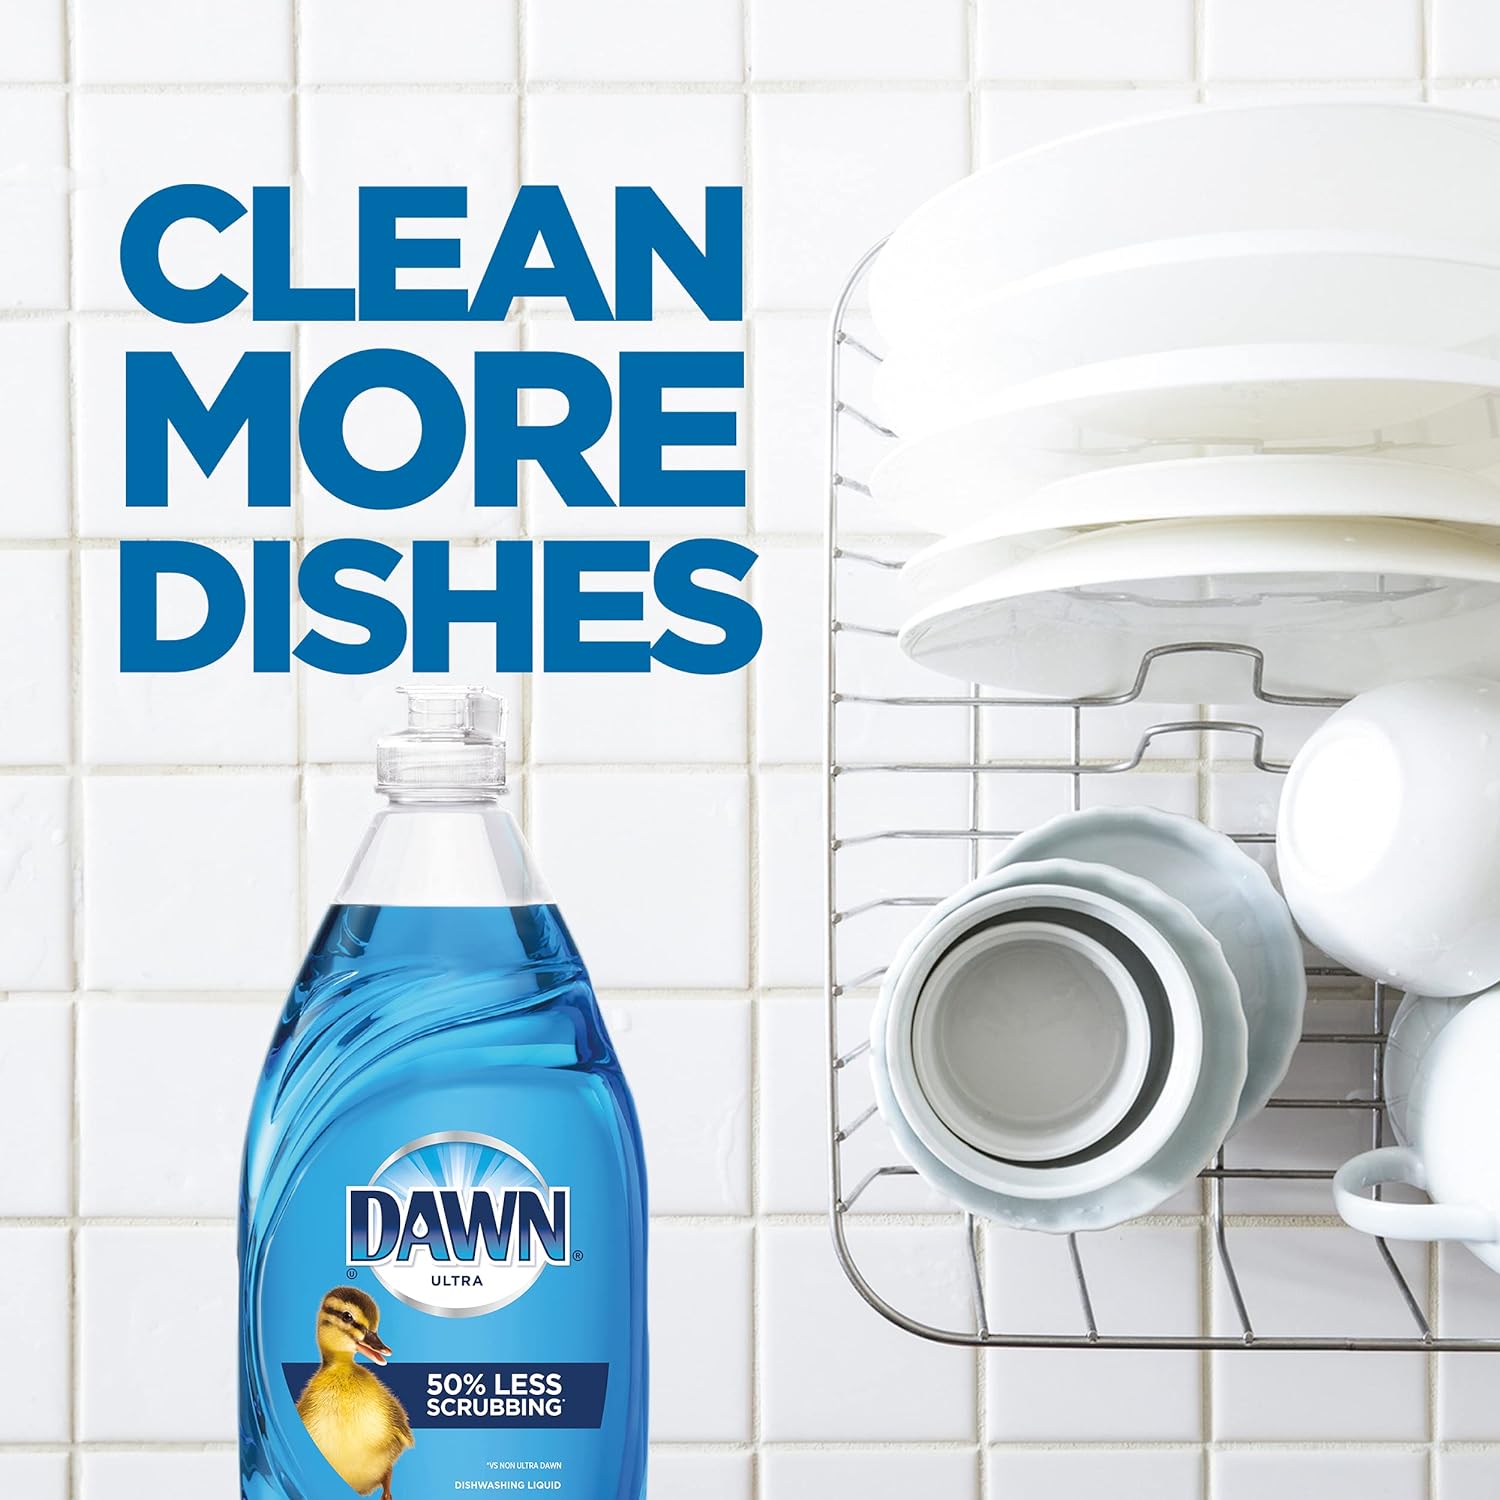 Dawn Ultra Dishwashing Liquid Dish Soap, Original Scent, 19.4 fl oz : Health & Household